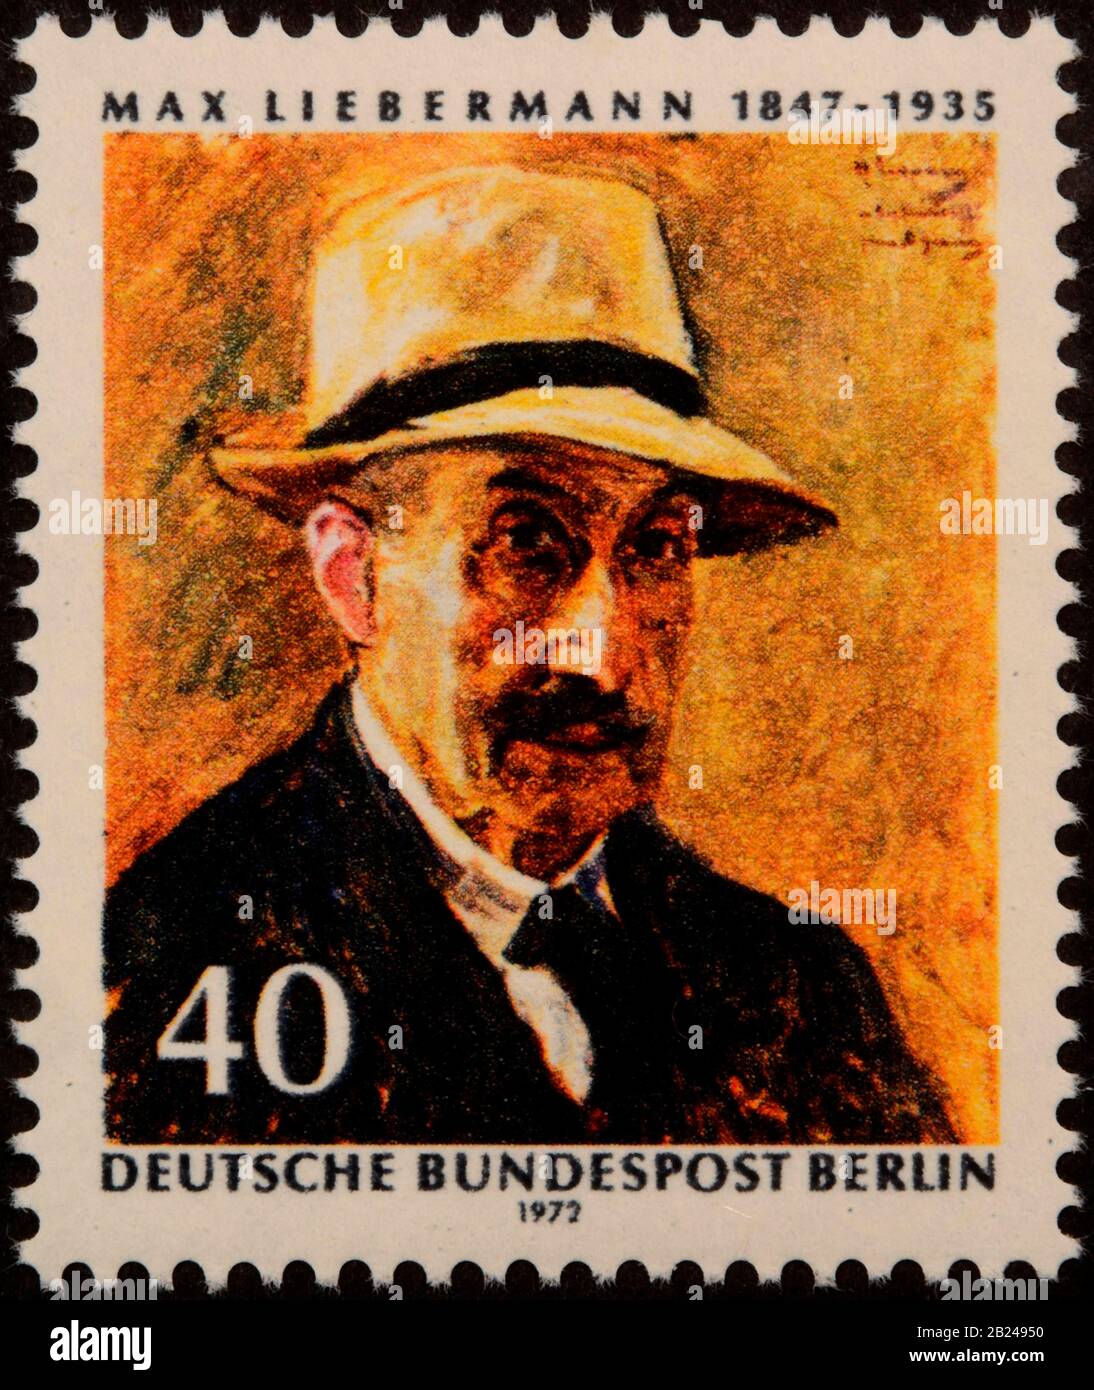 Max Liebermann, a German painter and printmaker of Ashkenazi Jewish ancestry, portrait on a German stamp Stock Photo